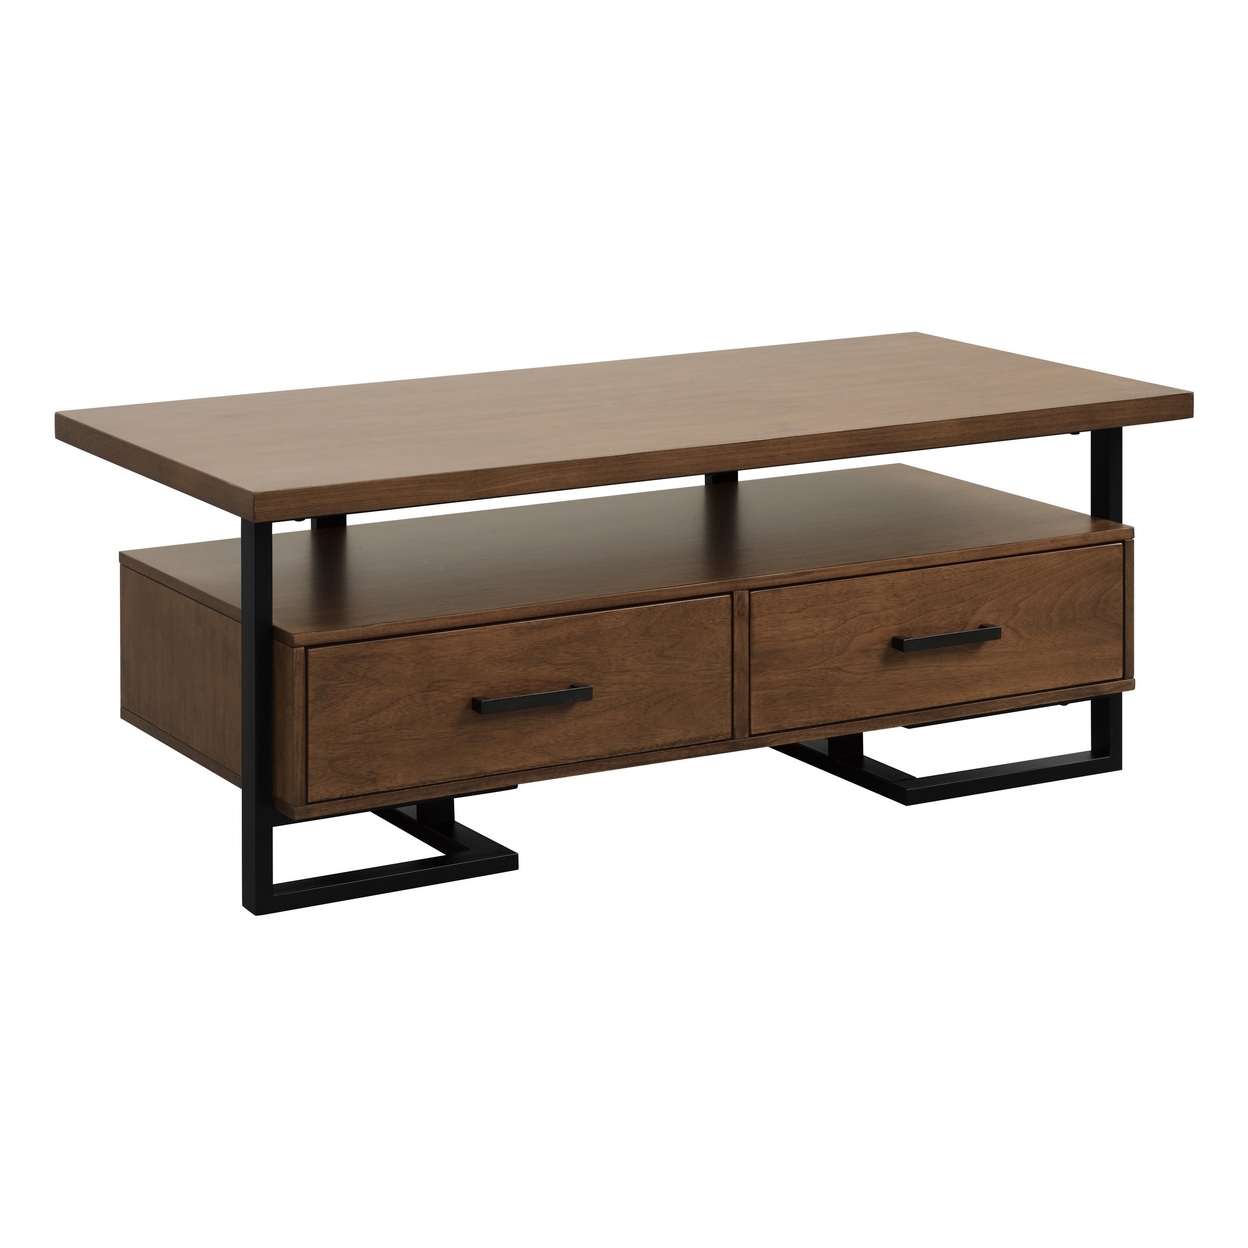 Voz 48 Inch Wood Coffee Table, 2 Drawers, Brown And Black, Bar Handles- Saltoro Sherpi